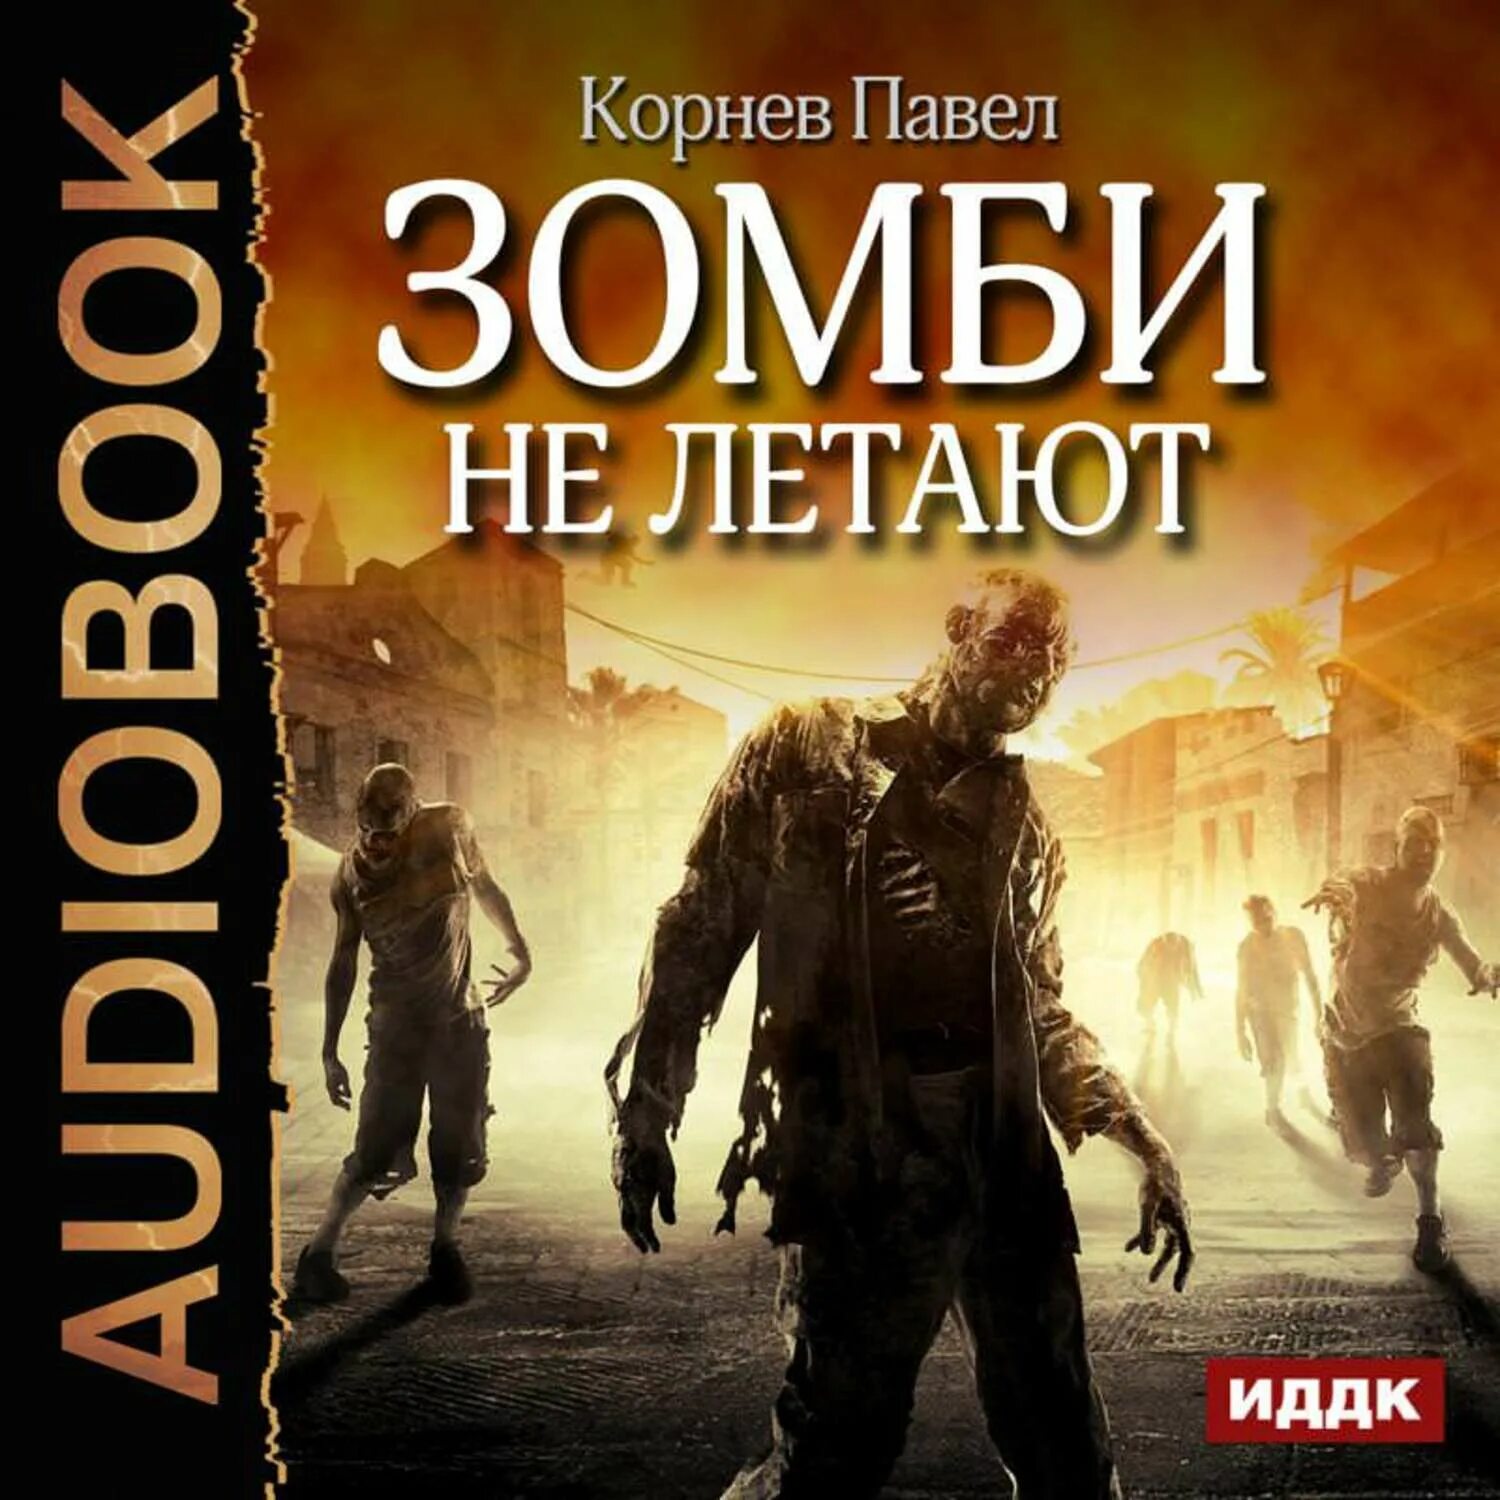 Аудиокнига постапокалипсис лучшее слушать. Фантастика про зомби книги.